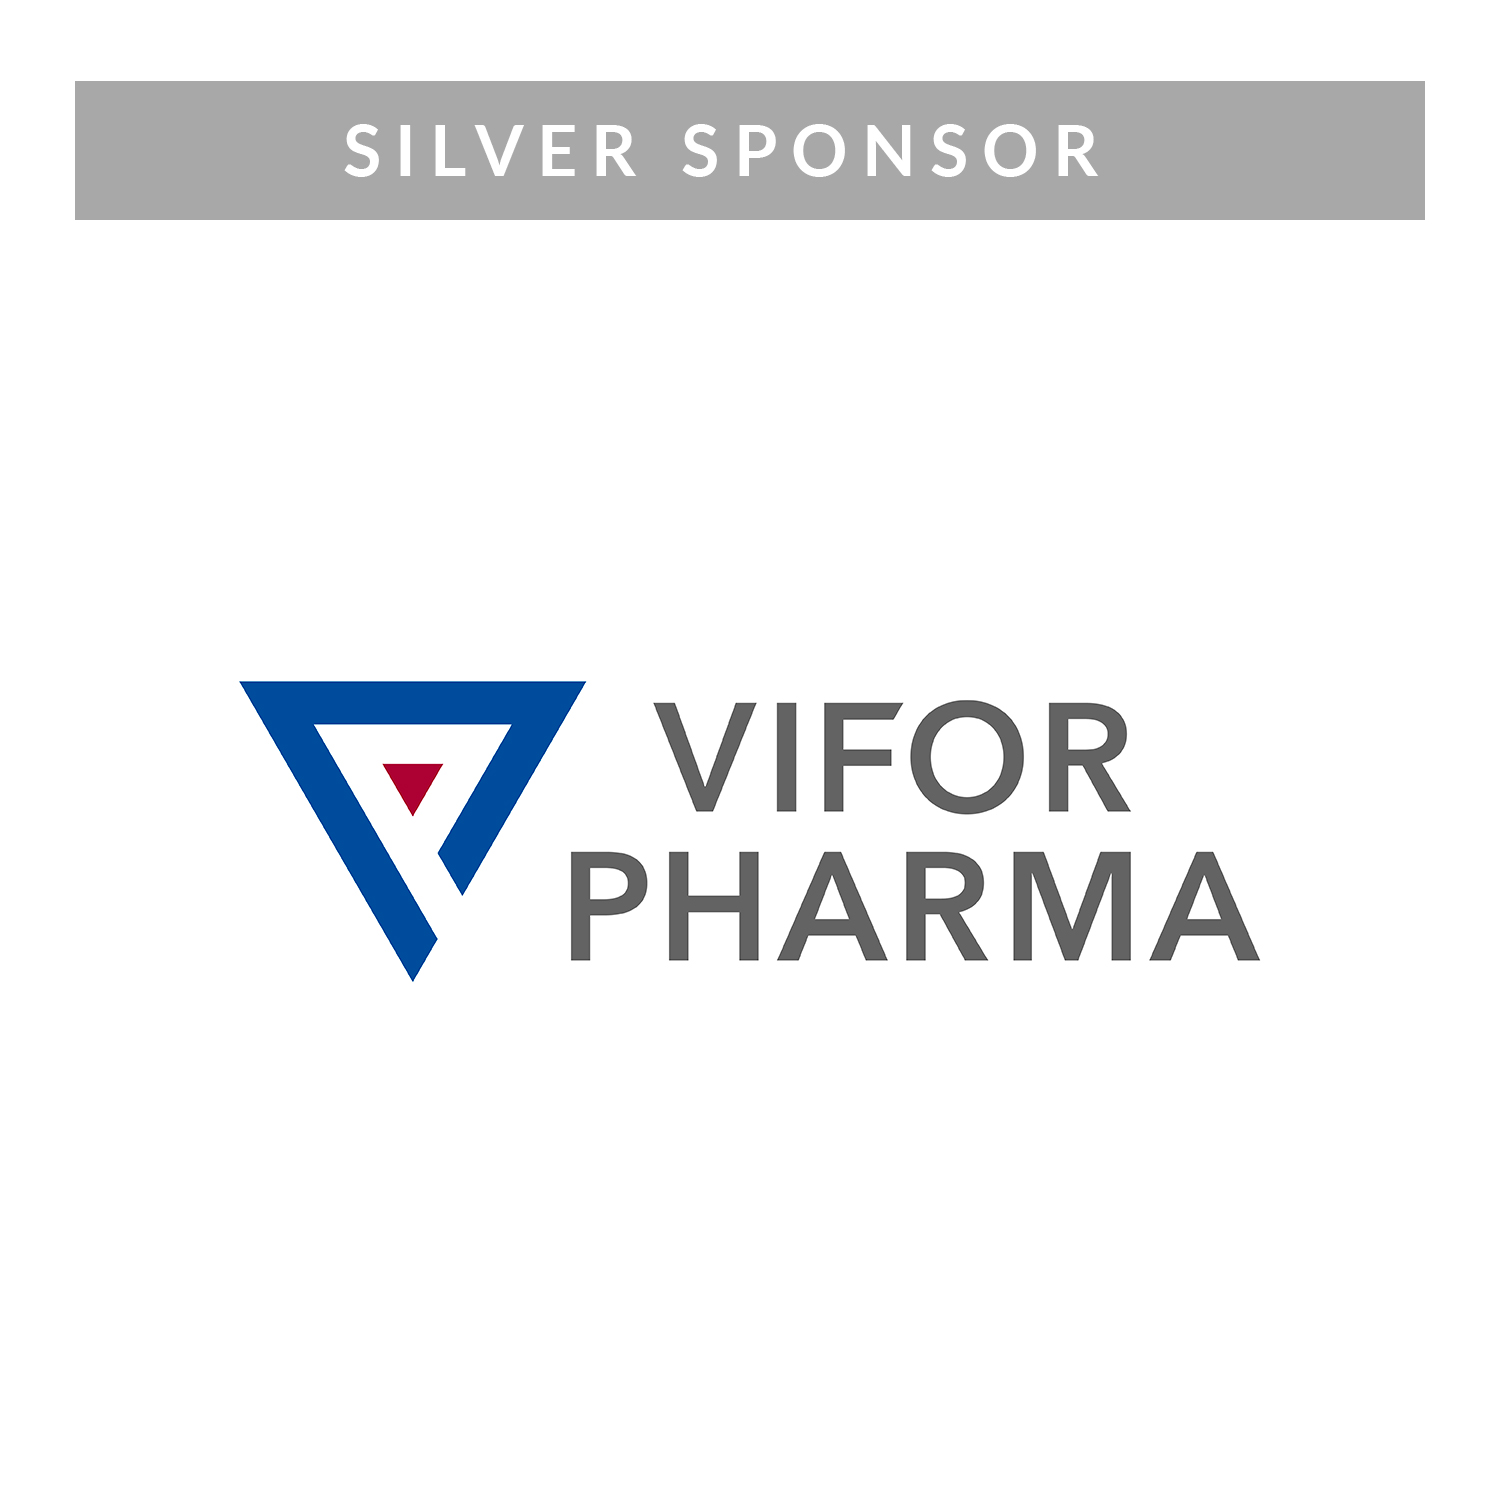 vifor-pharma